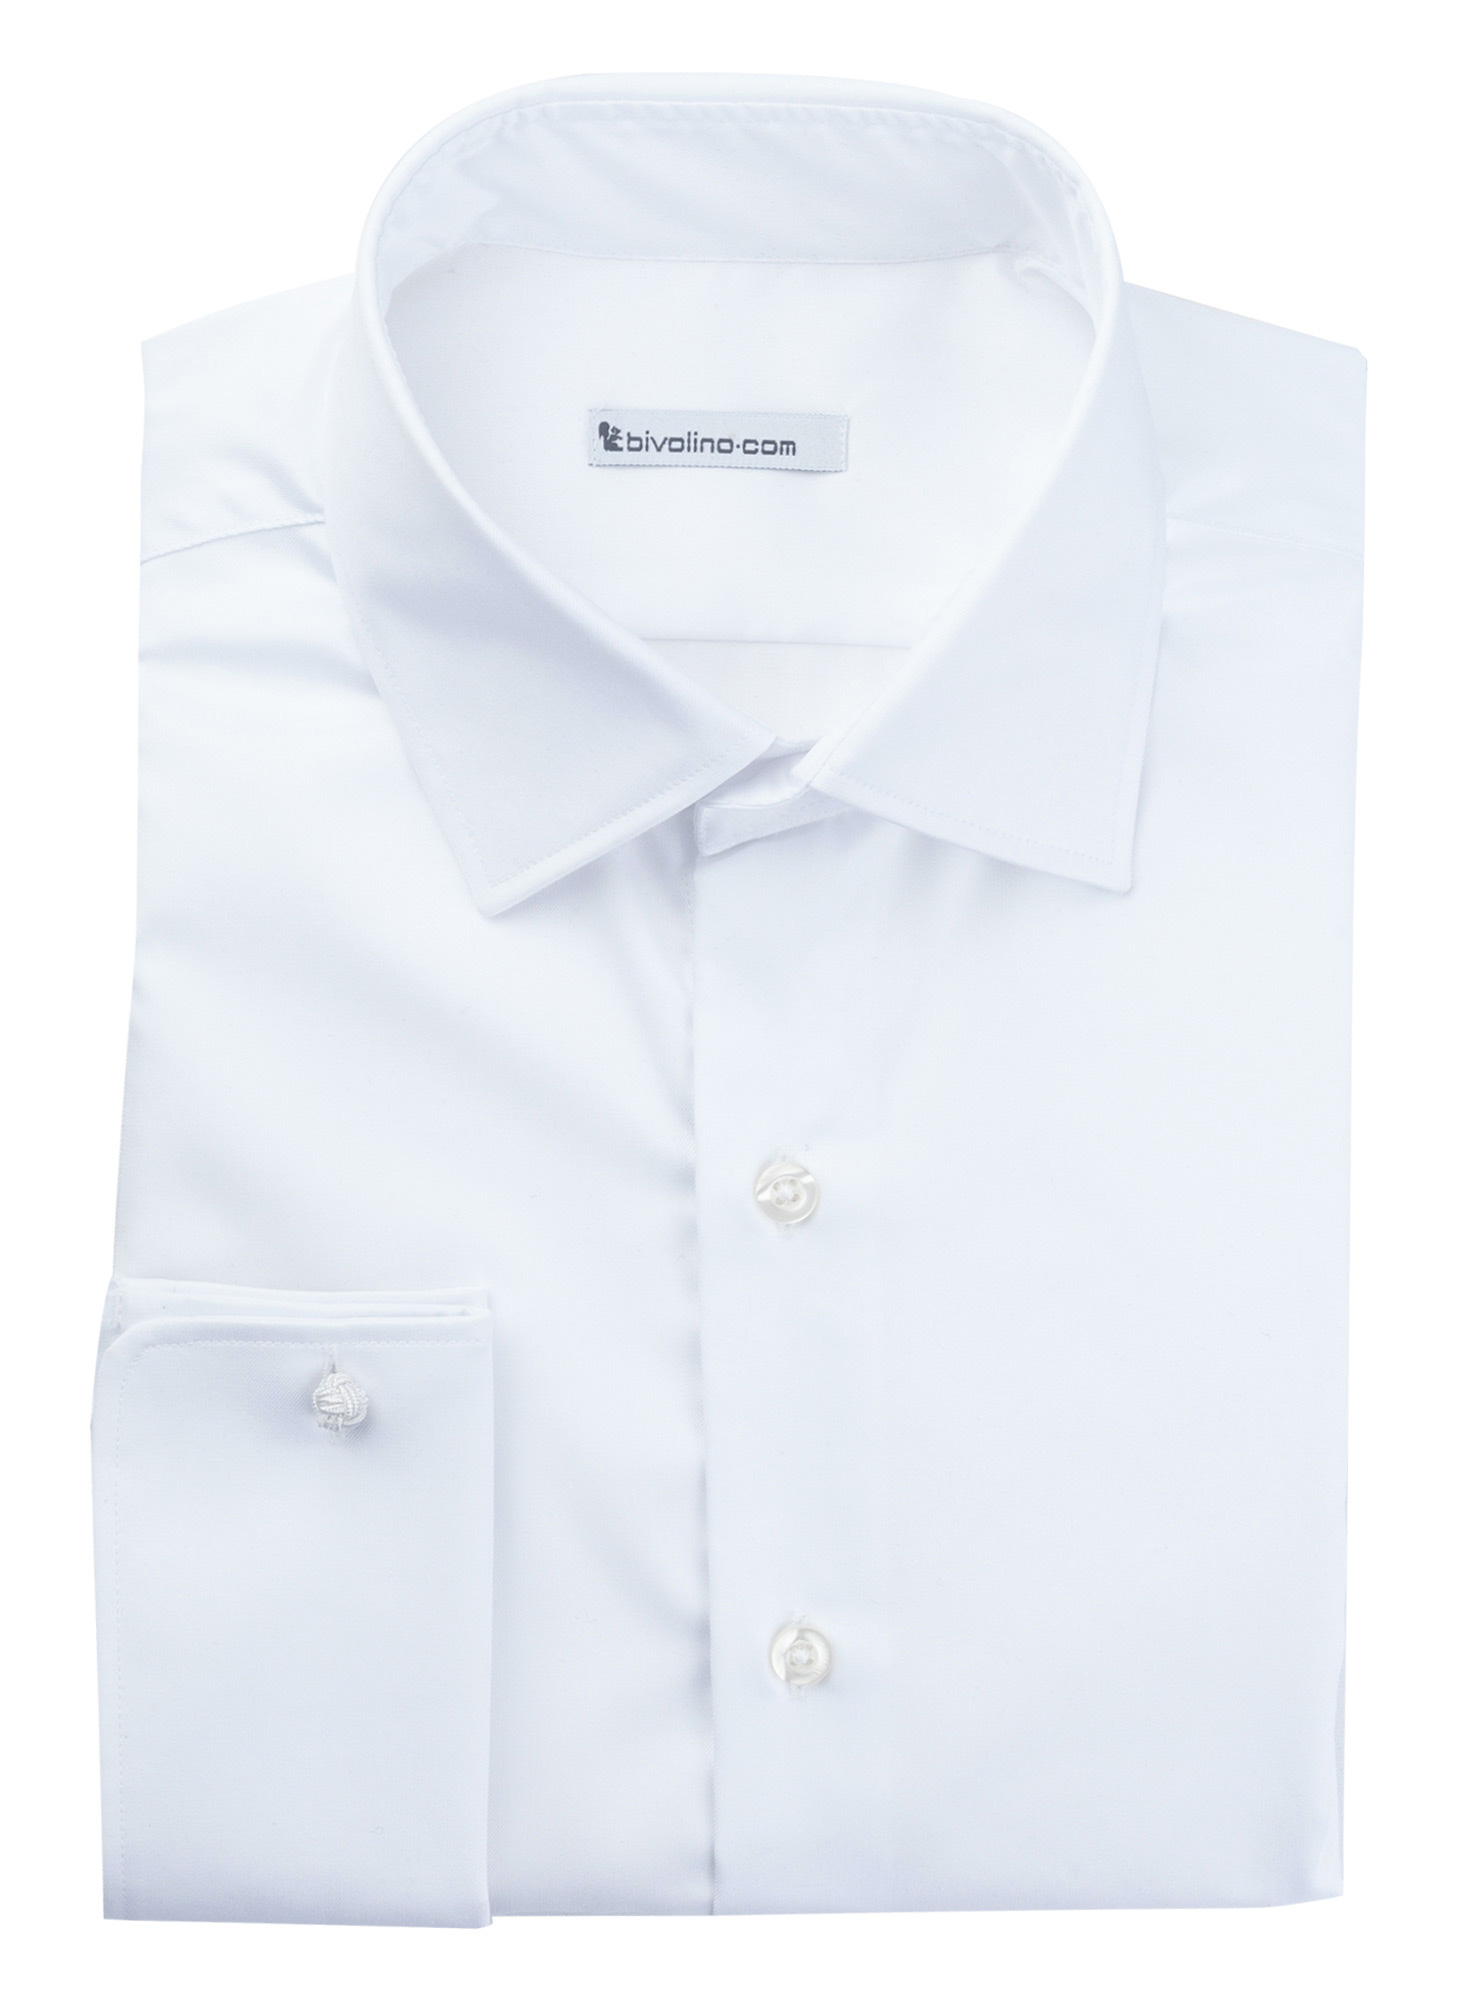 MACERATA - Sarga de algodón egipcio de doble blanca camisa hombre - MARZI 1